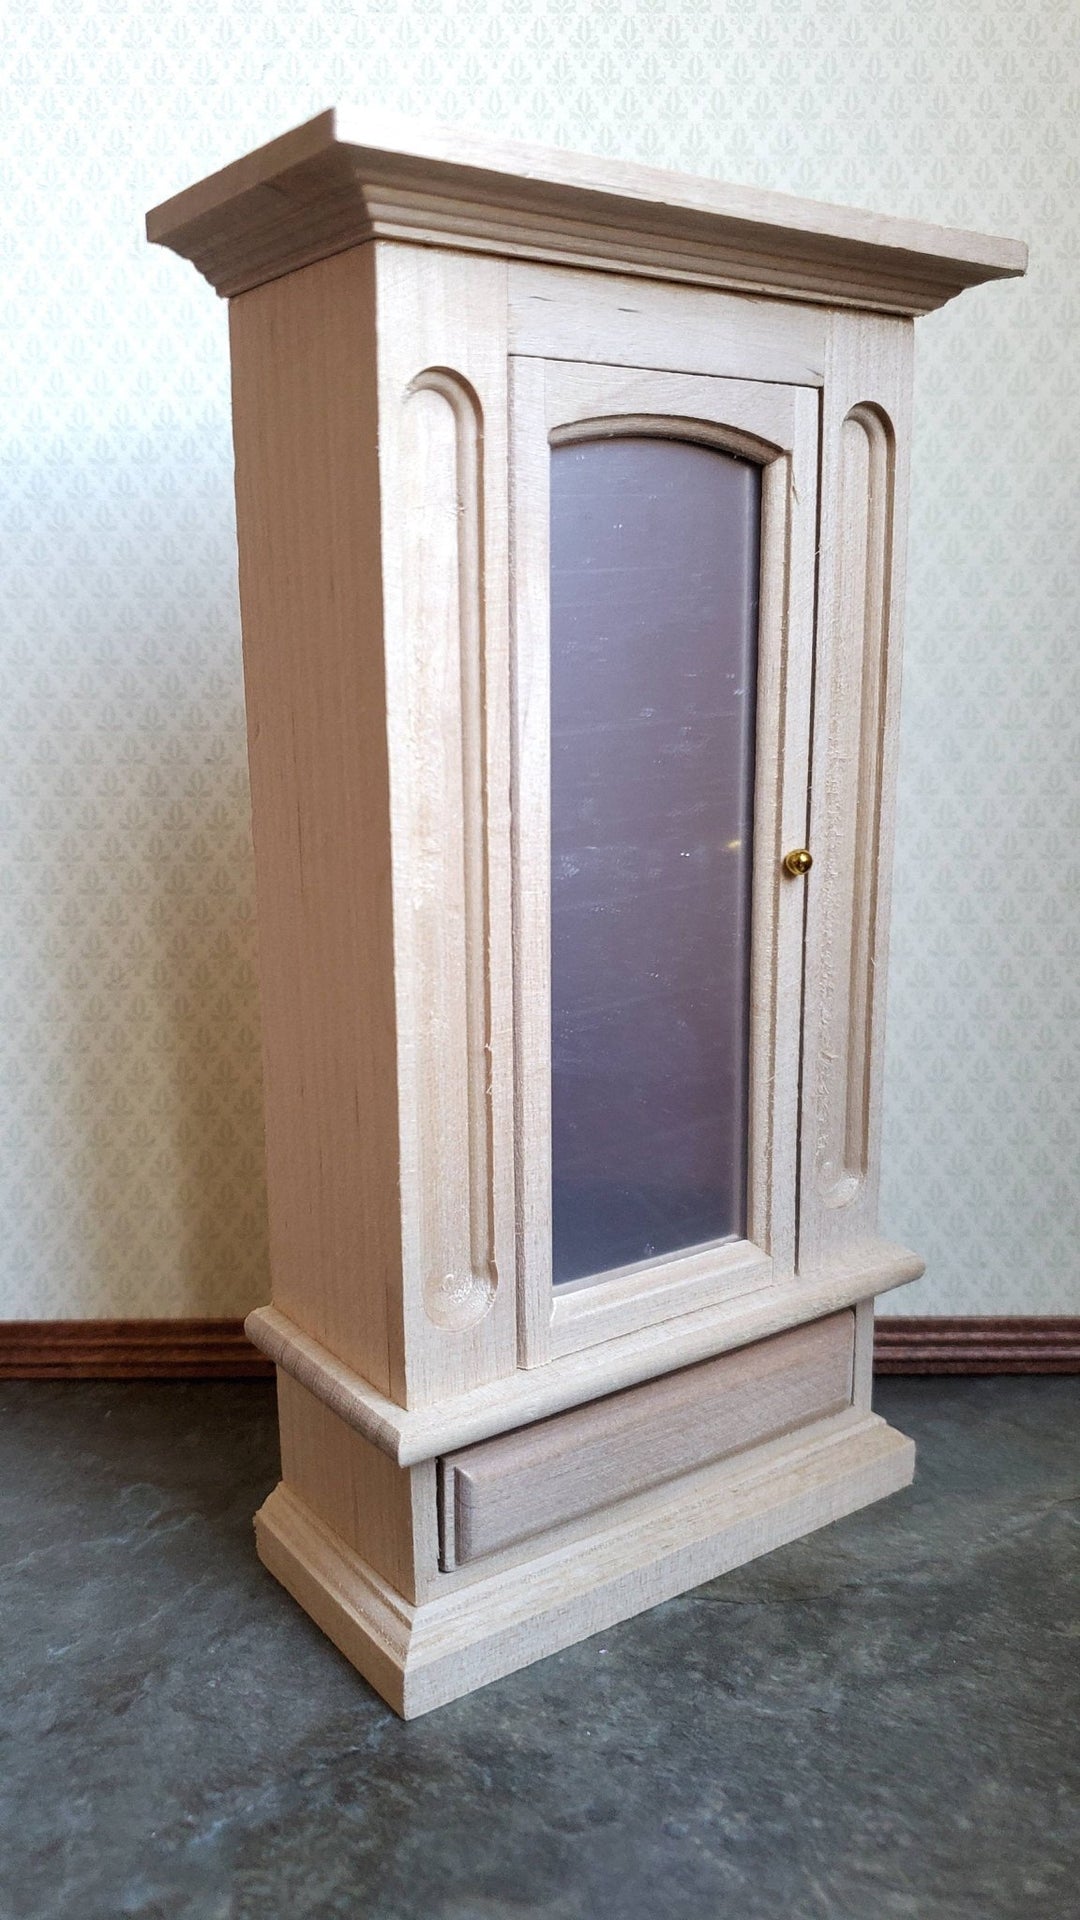 Dollhouse Miniature Wardrobe Armoire Closet Mirrored Furniture 1:12 Scale Unfinished Wood - Miniature Crush